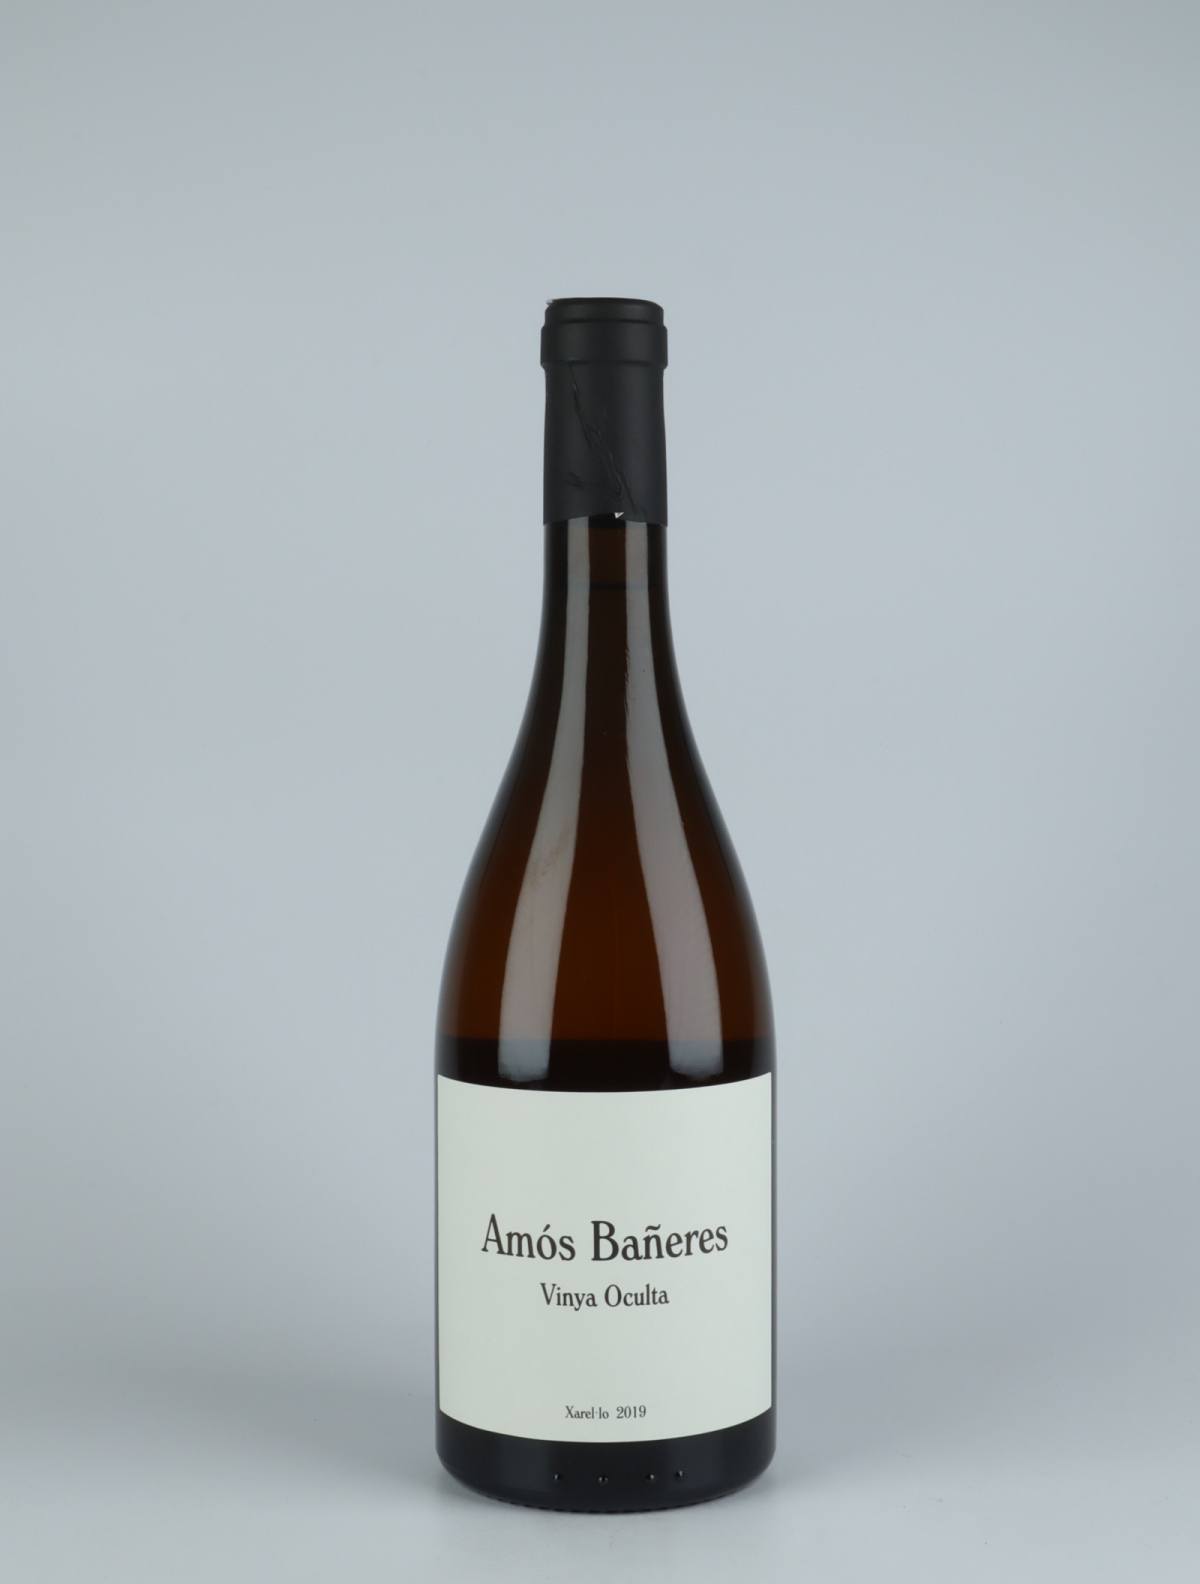 A bottle 2019 Vinya Oculta White wine from Amós Bañeres, Penedès in Spain